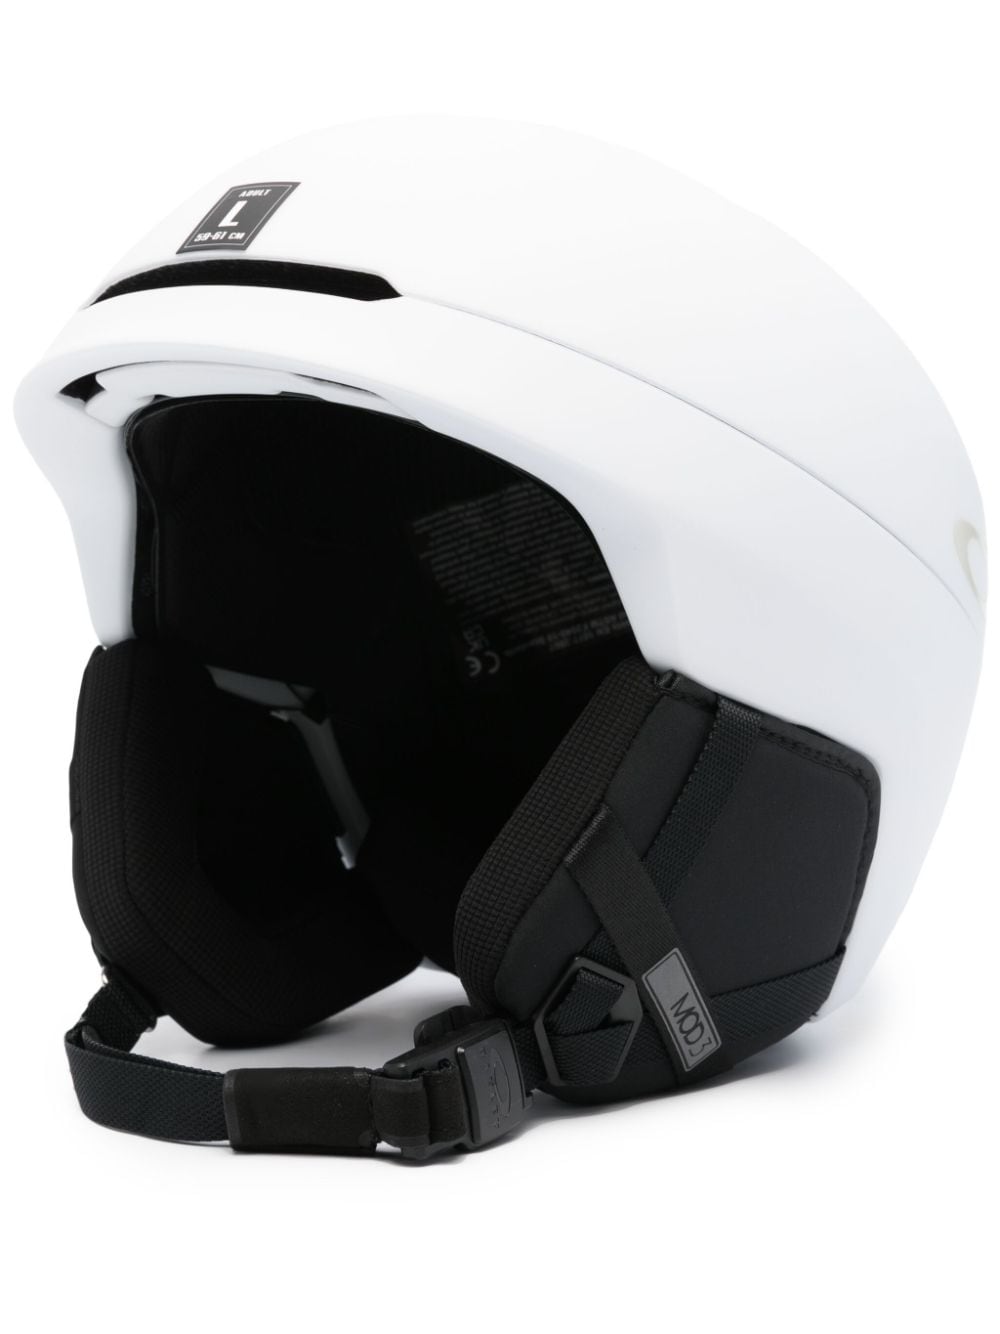 MOD3 ski helmet<BR/><BR/>